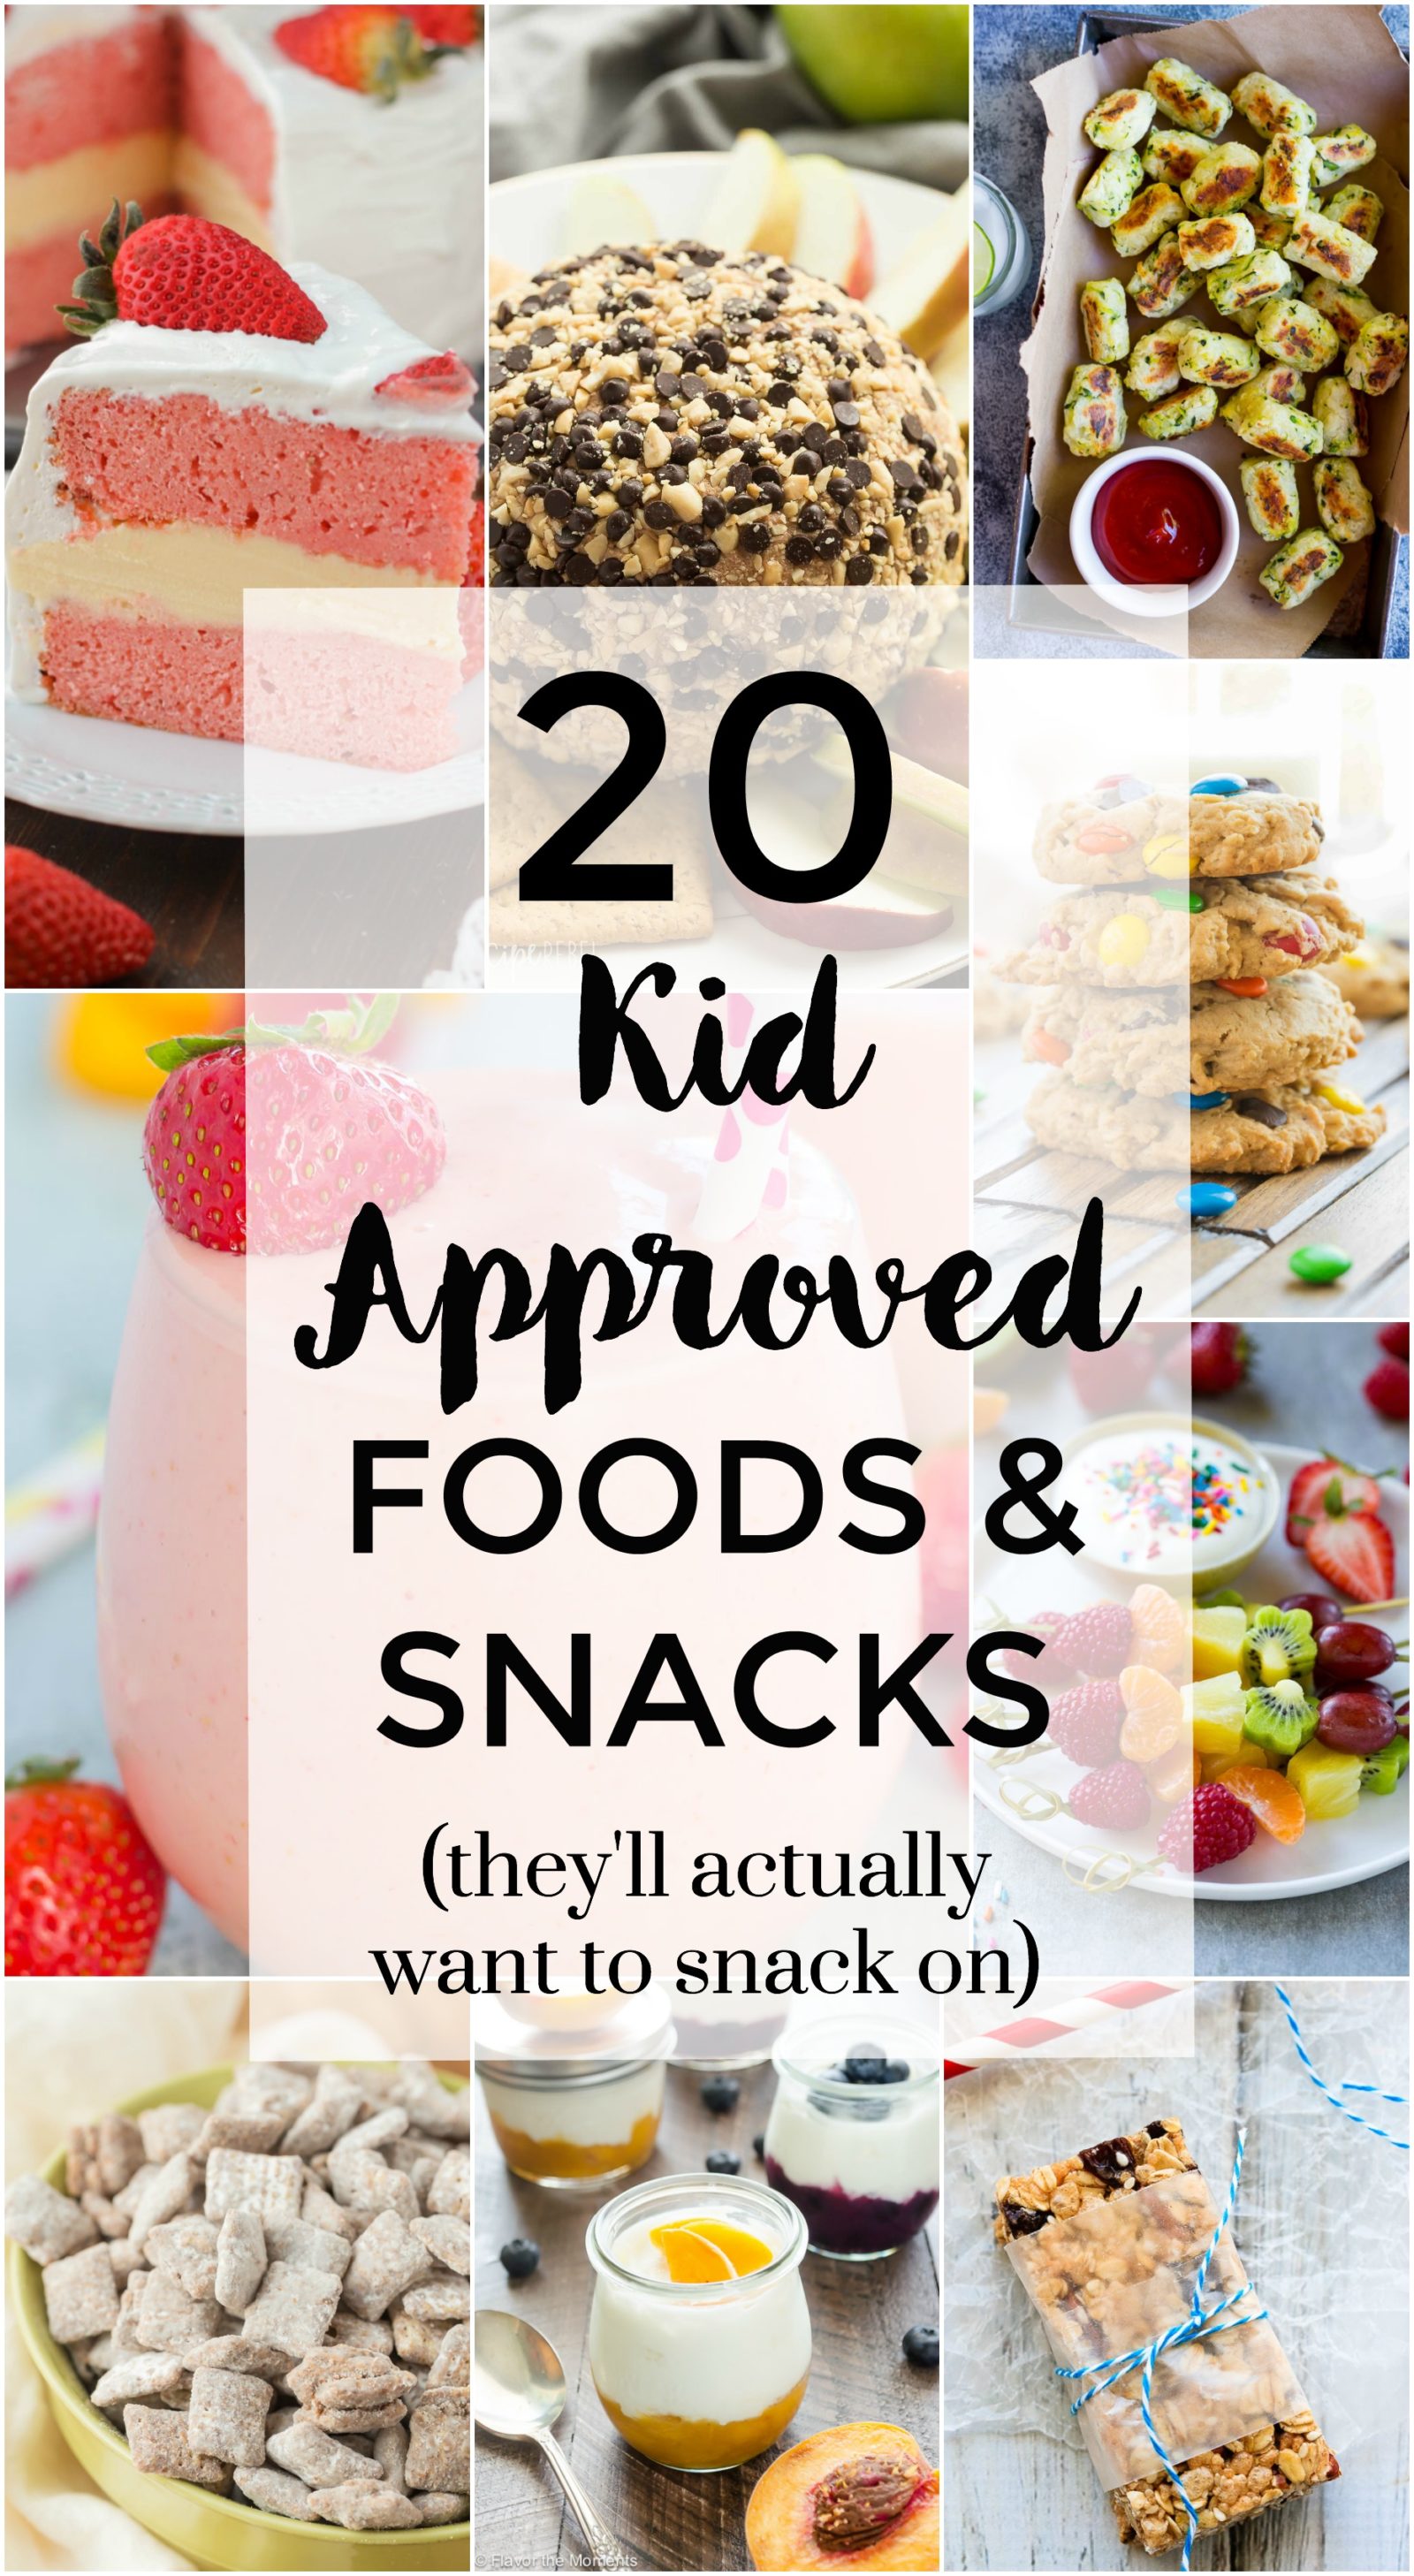 20 Kid Approved Foods & Snacks